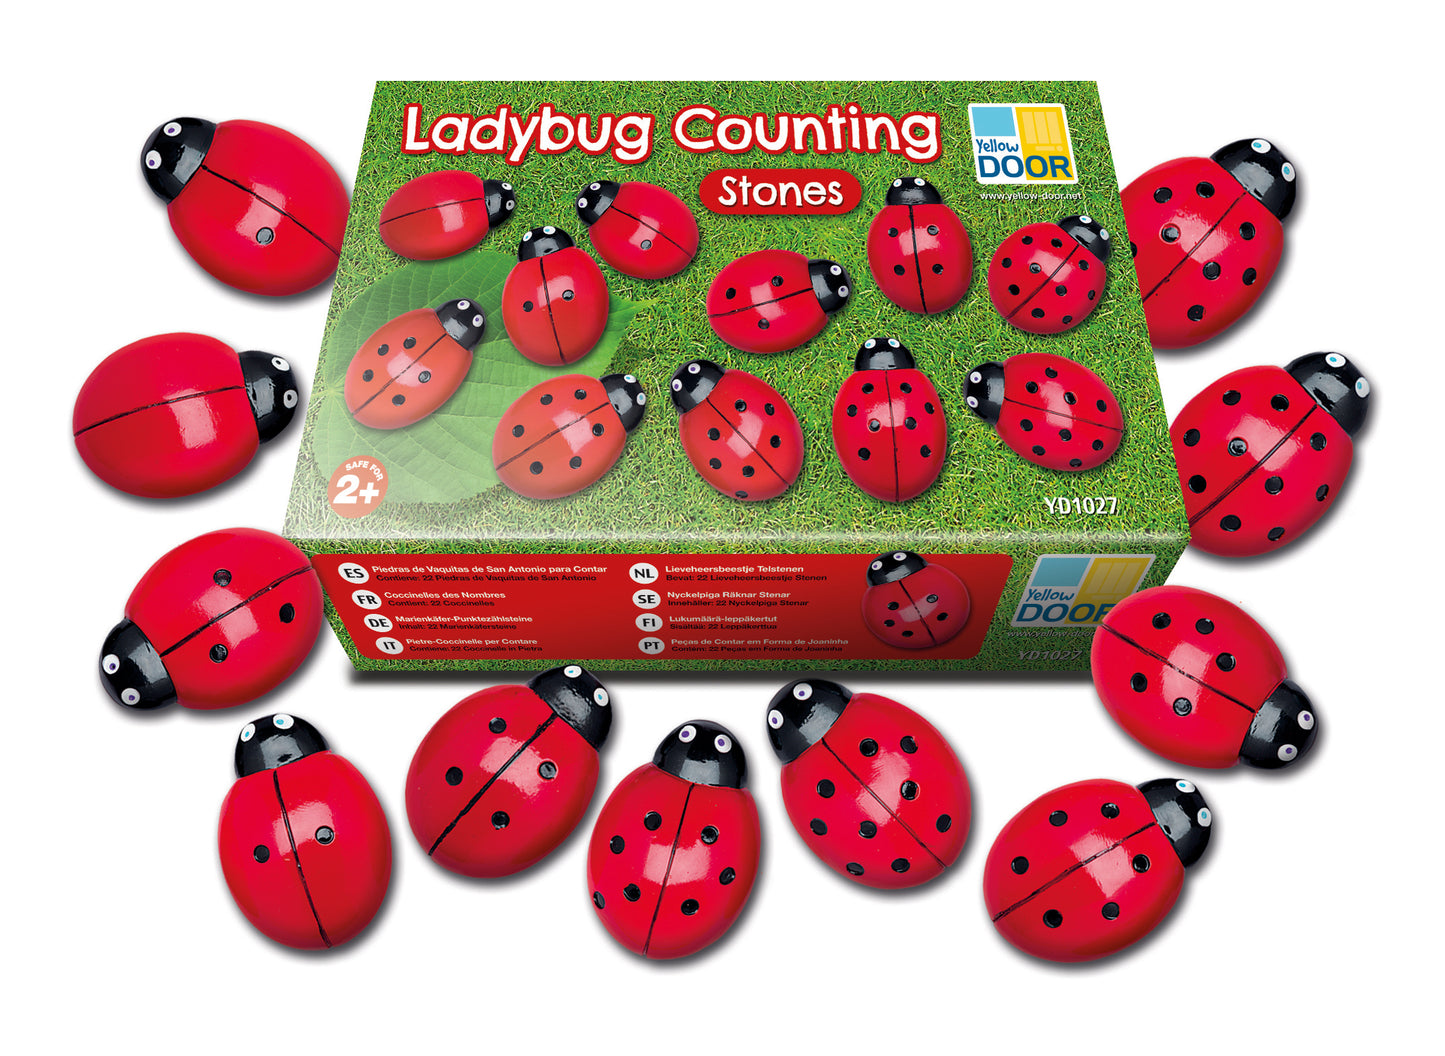 Ladybug Counting Stones by Yellow Door